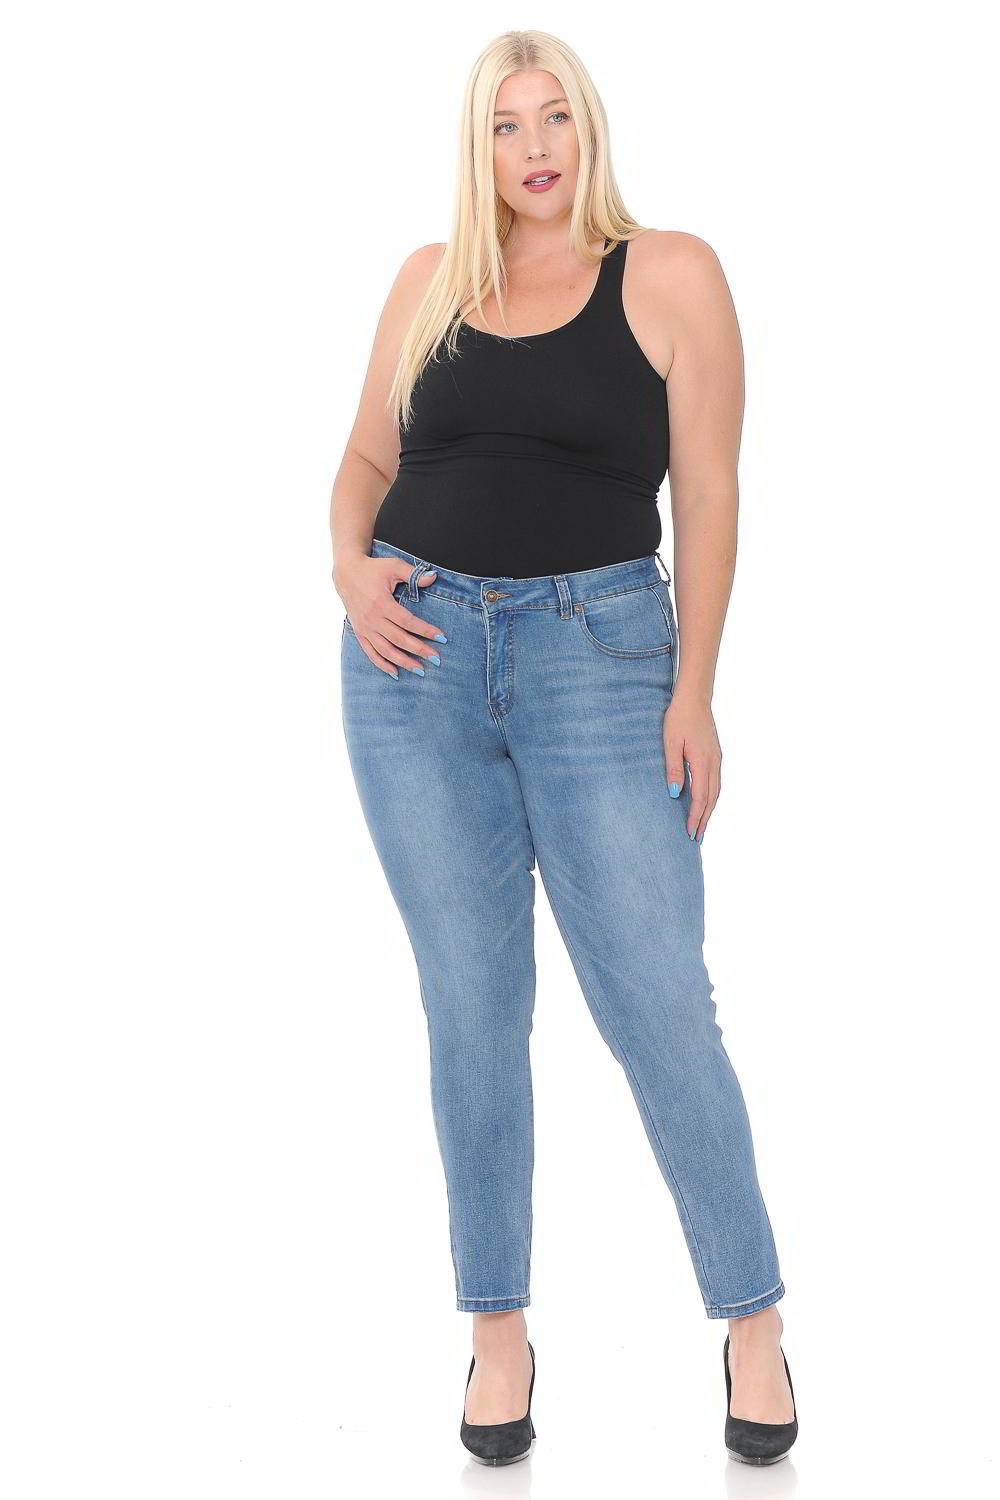 size 14 jeans waist size